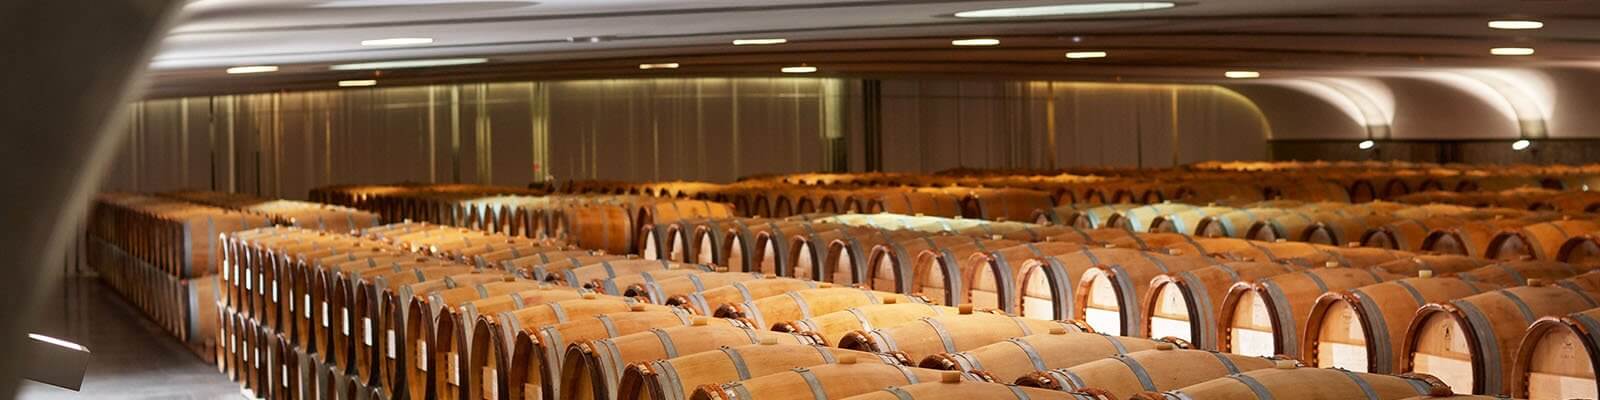 Onze collectie Château Pichon Longueville Baron - Vind deze bij Onshore Cellars uw jacht wijn leverancier